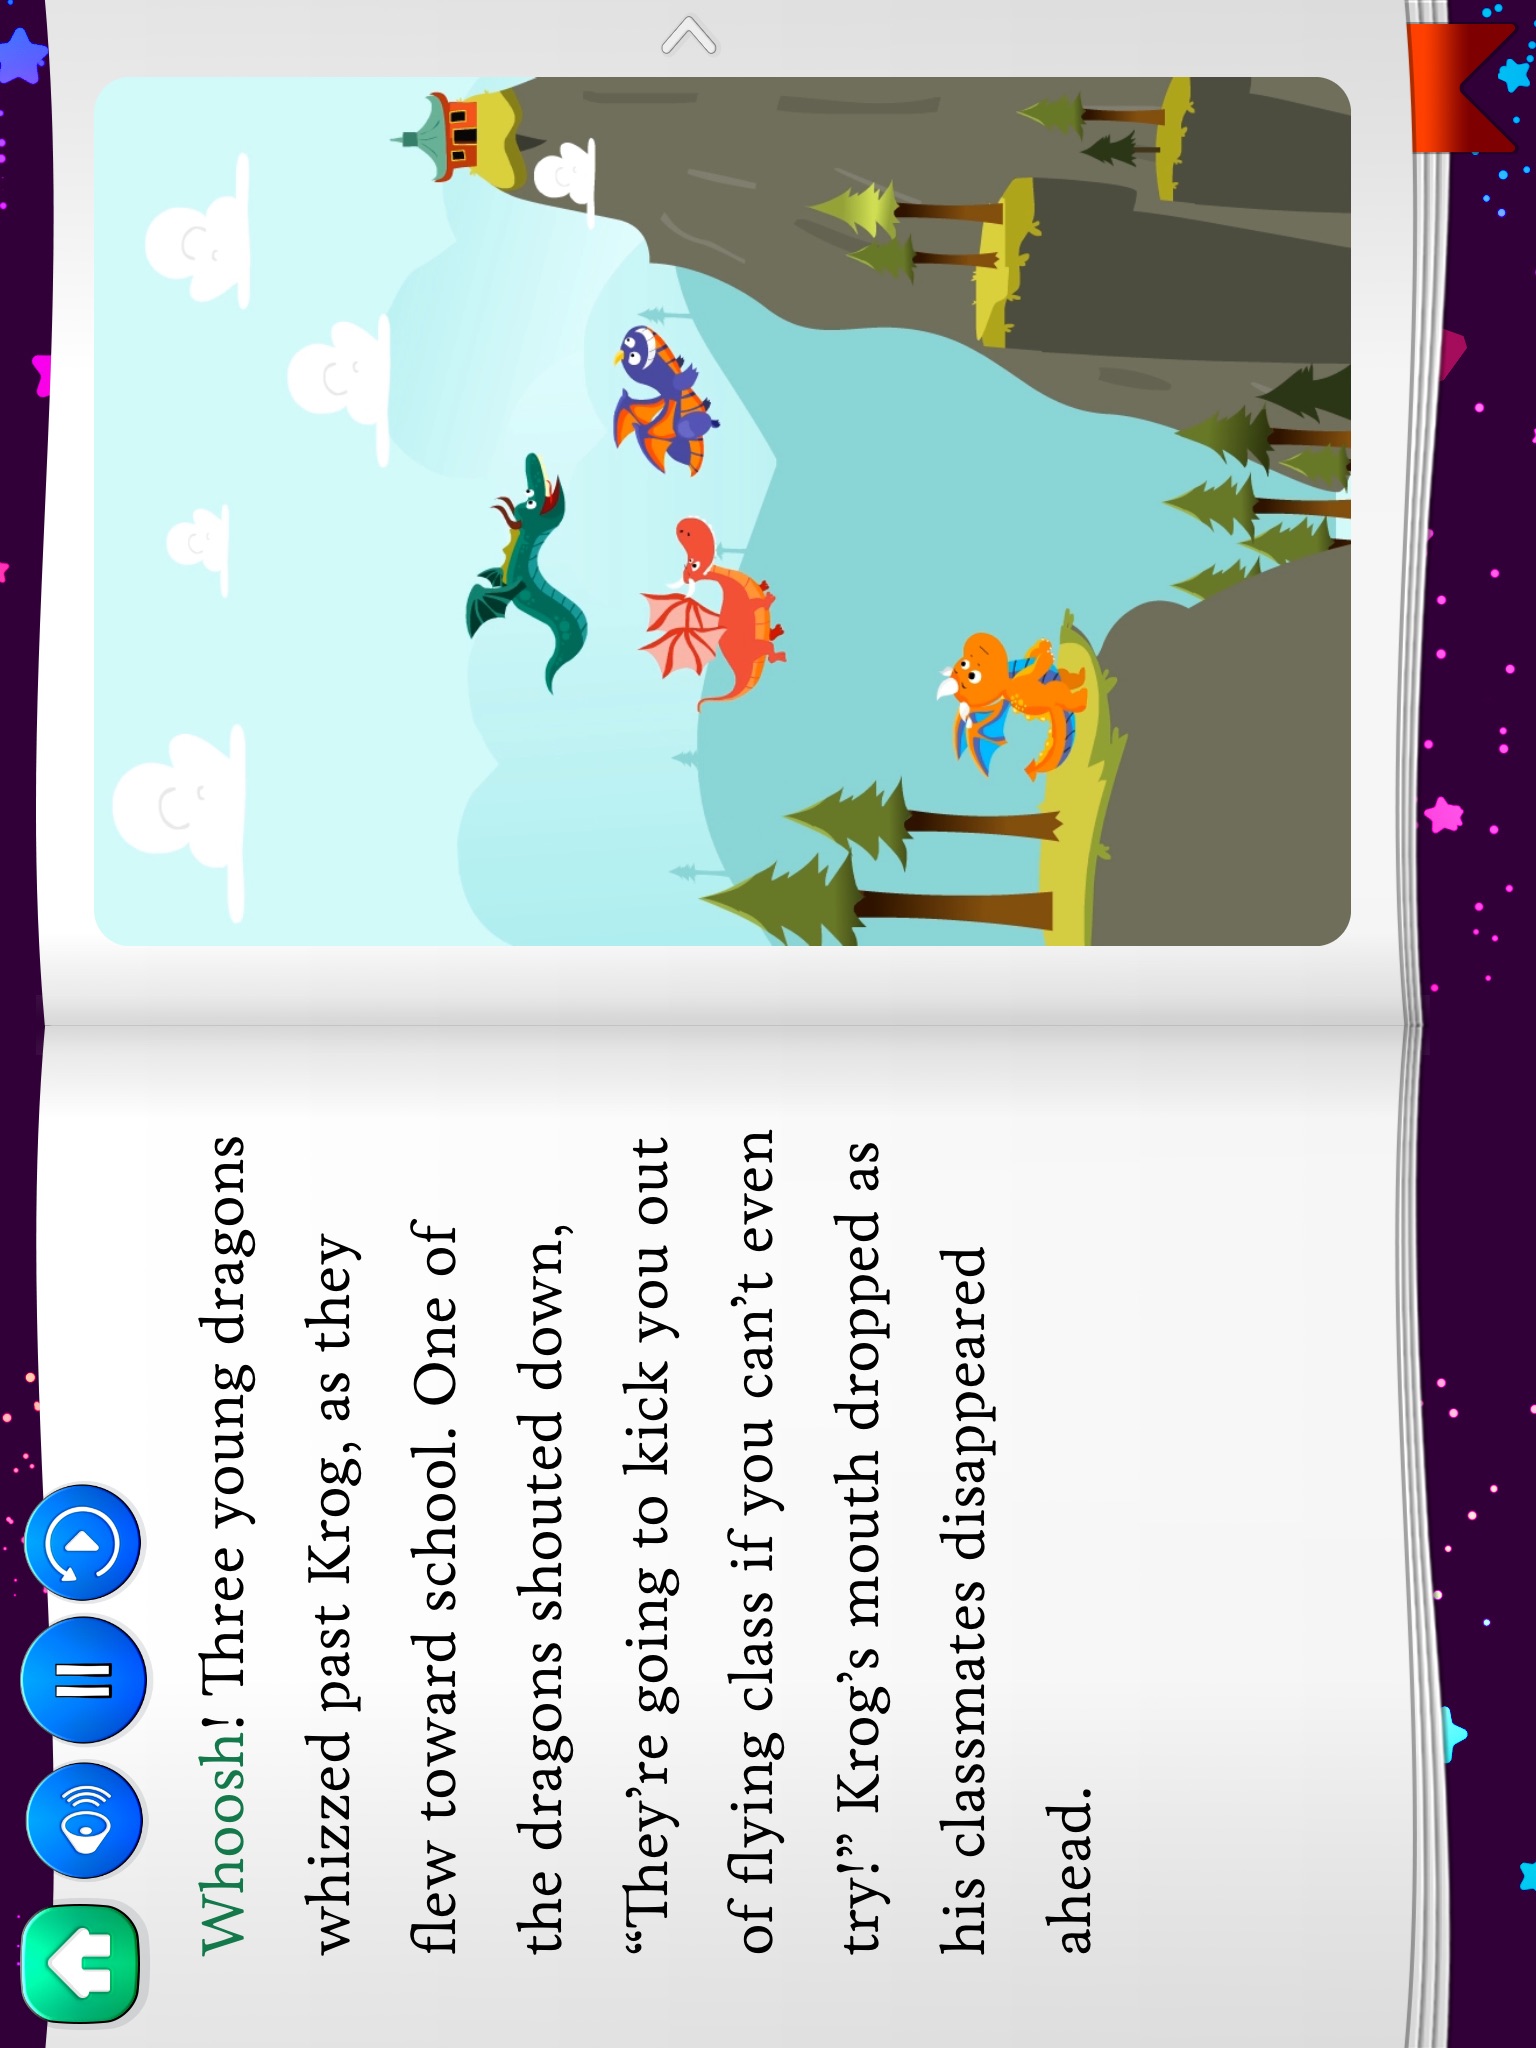 Vuelo - Stories for kids screenshot 4